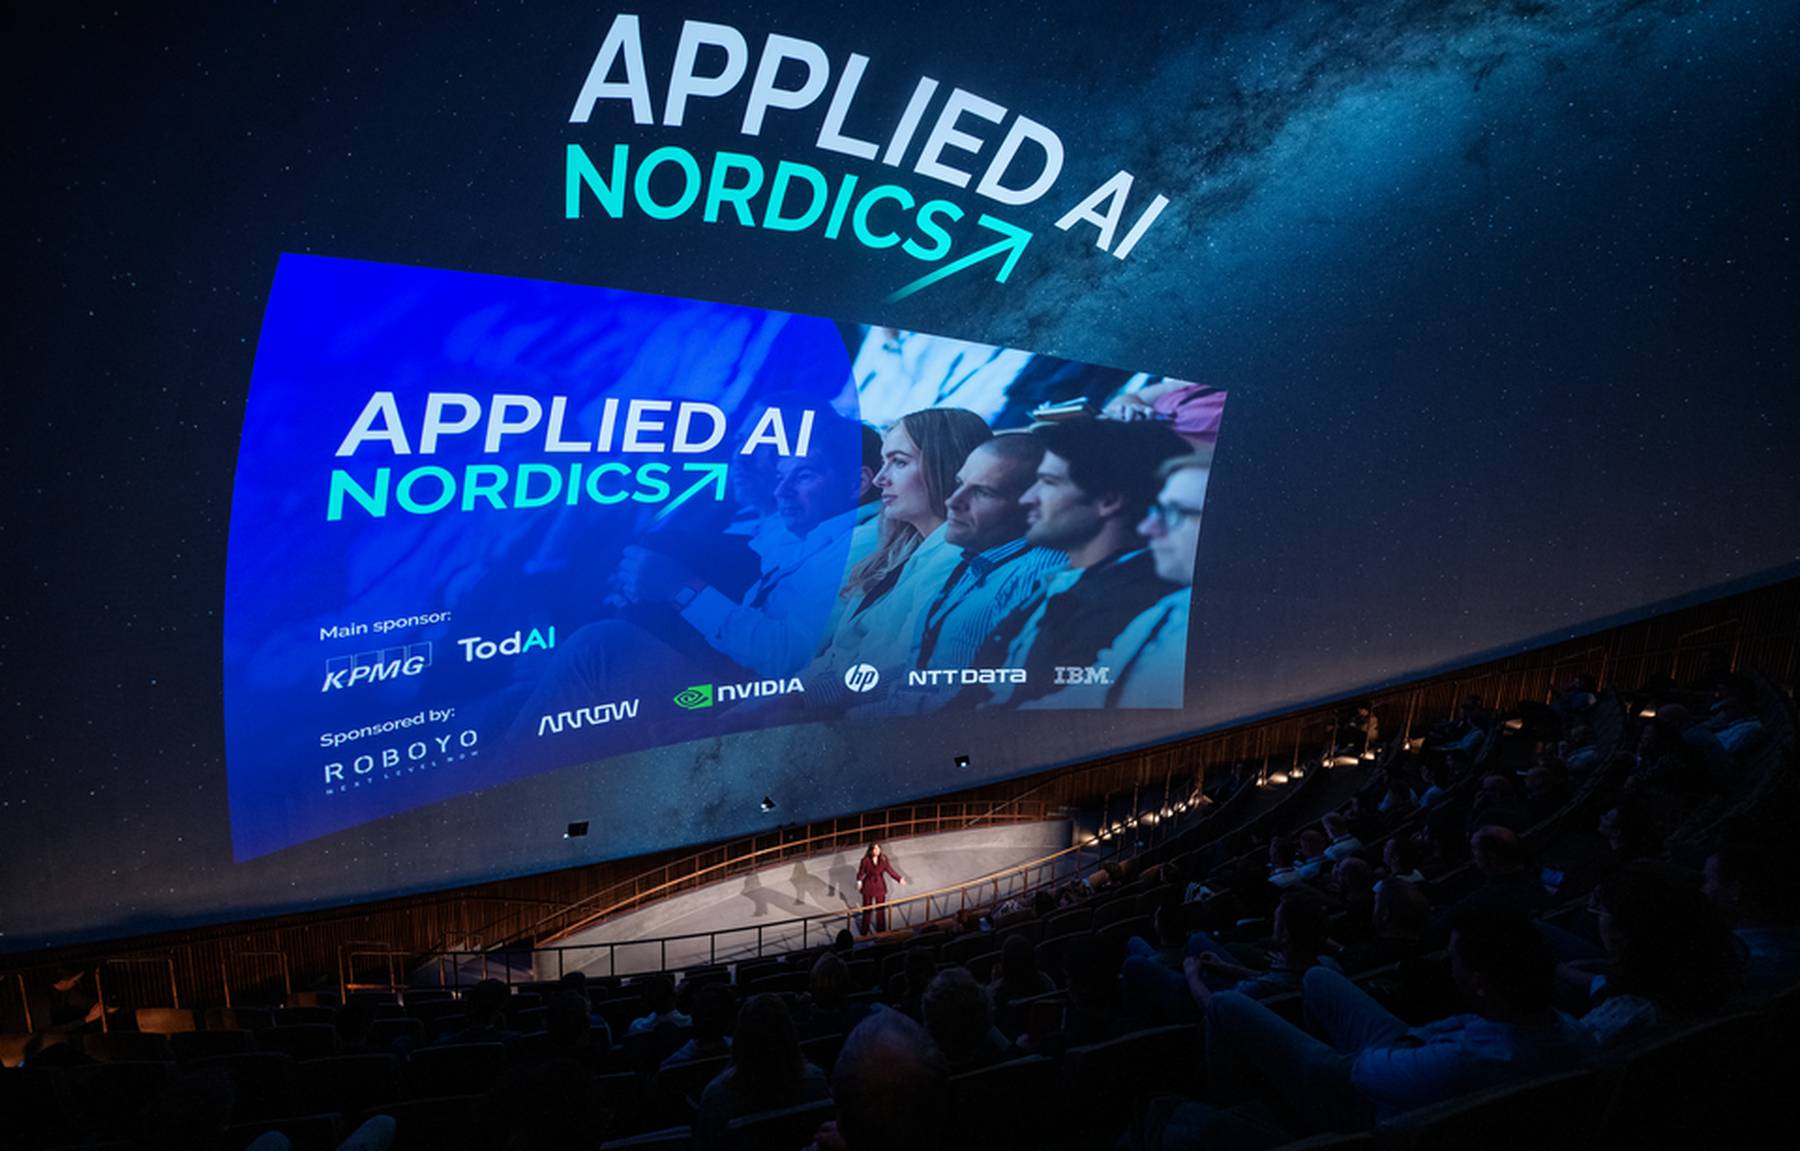 Applied AI Nordics 2024